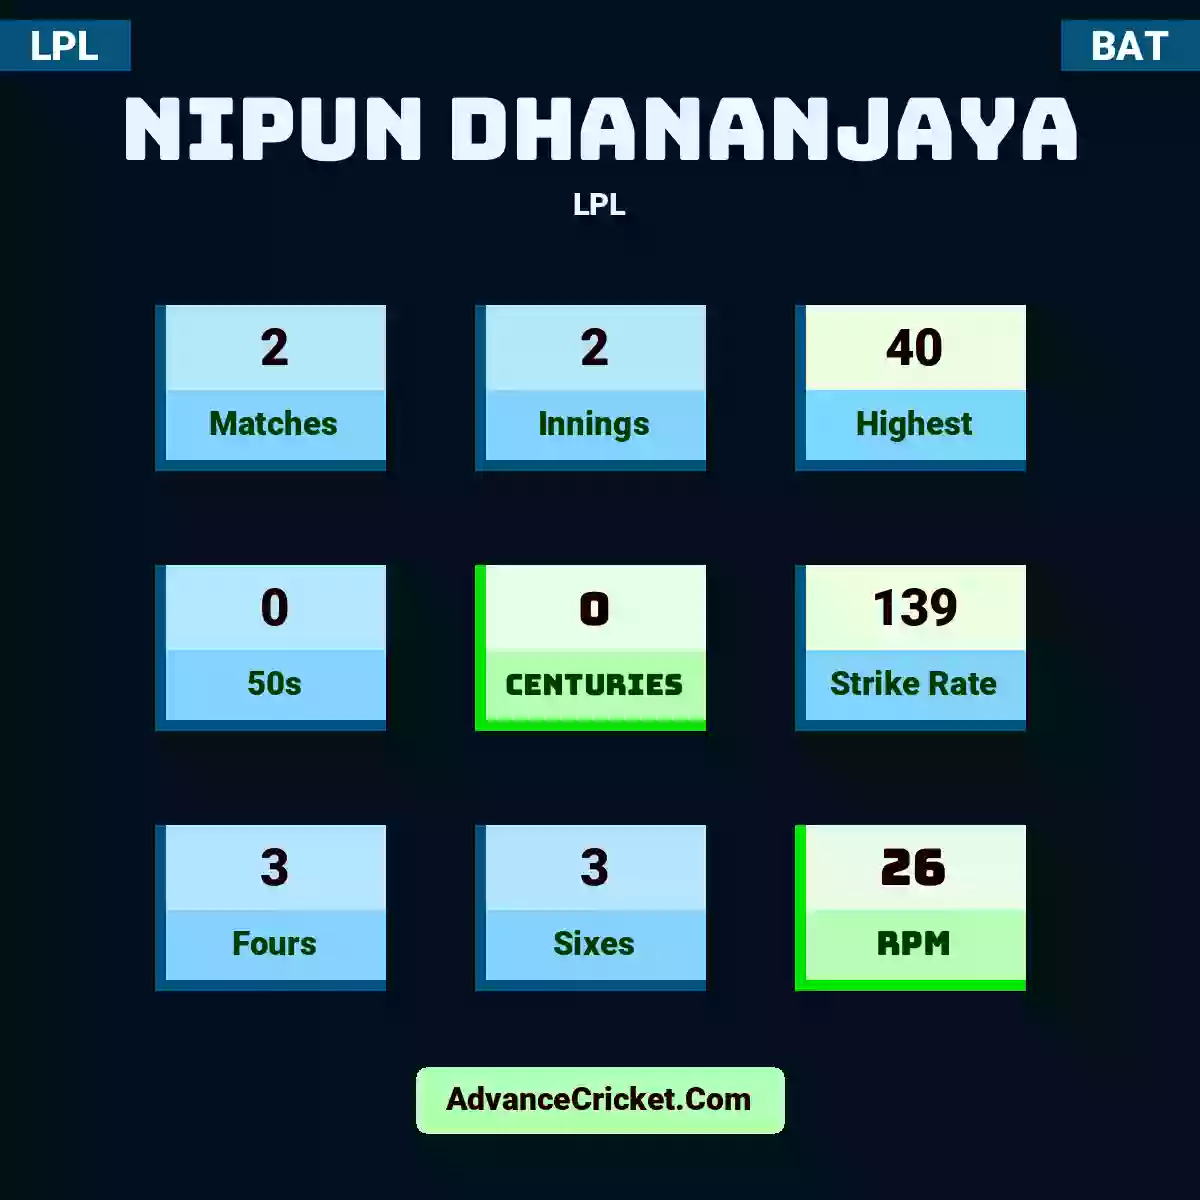 Nipun Dhananjaya LPL , Nipun Dhananjaya played 2 matches, scored 40 runs as highest, 0 half-centuries, and 0 centuries, with a strike rate of 139. N.Dhananjaya hit 3 fours and 3 sixes, with an RPM of 26.